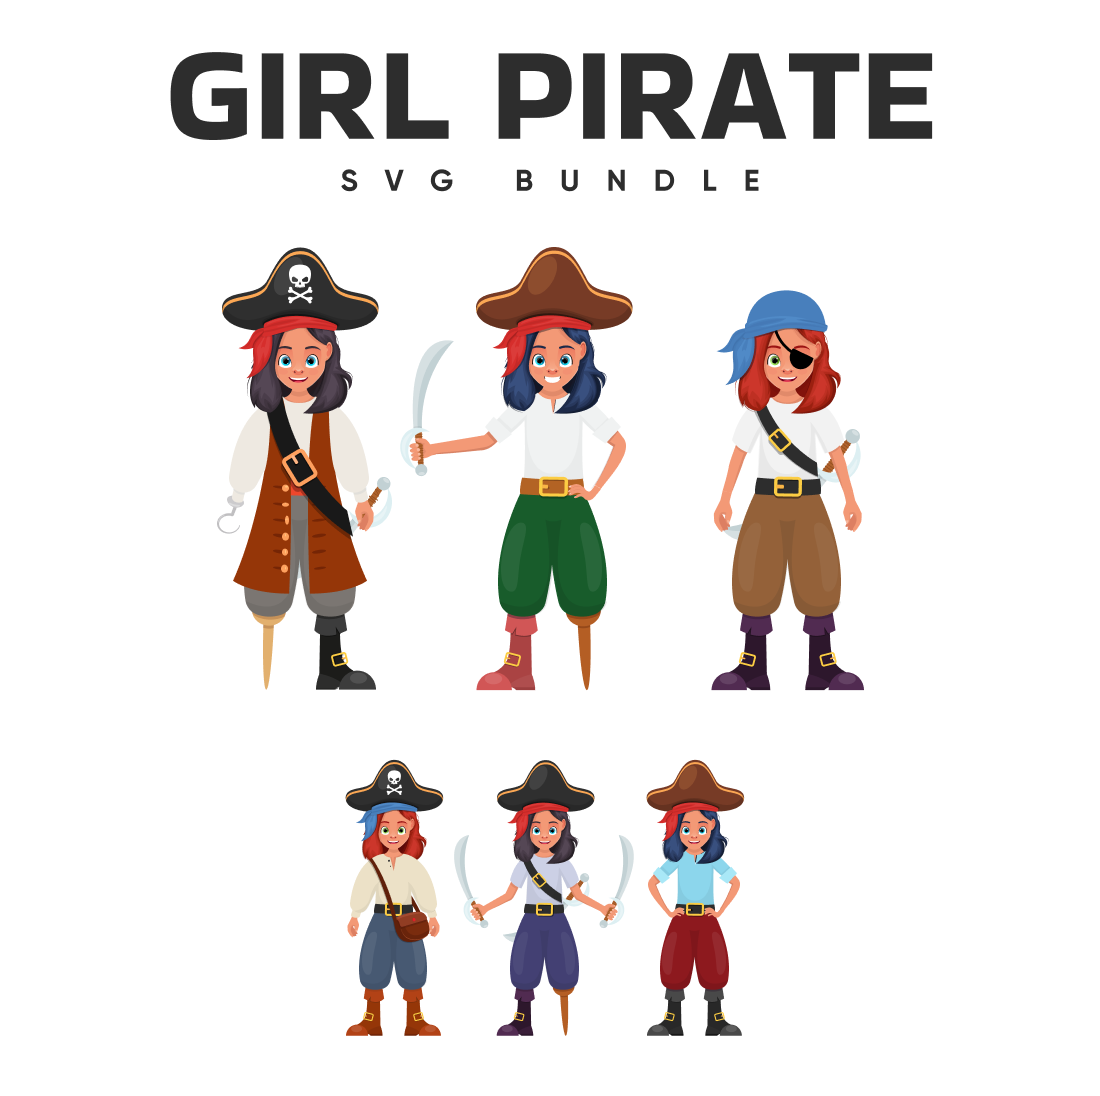 Prints of girl pirate svg bundle.